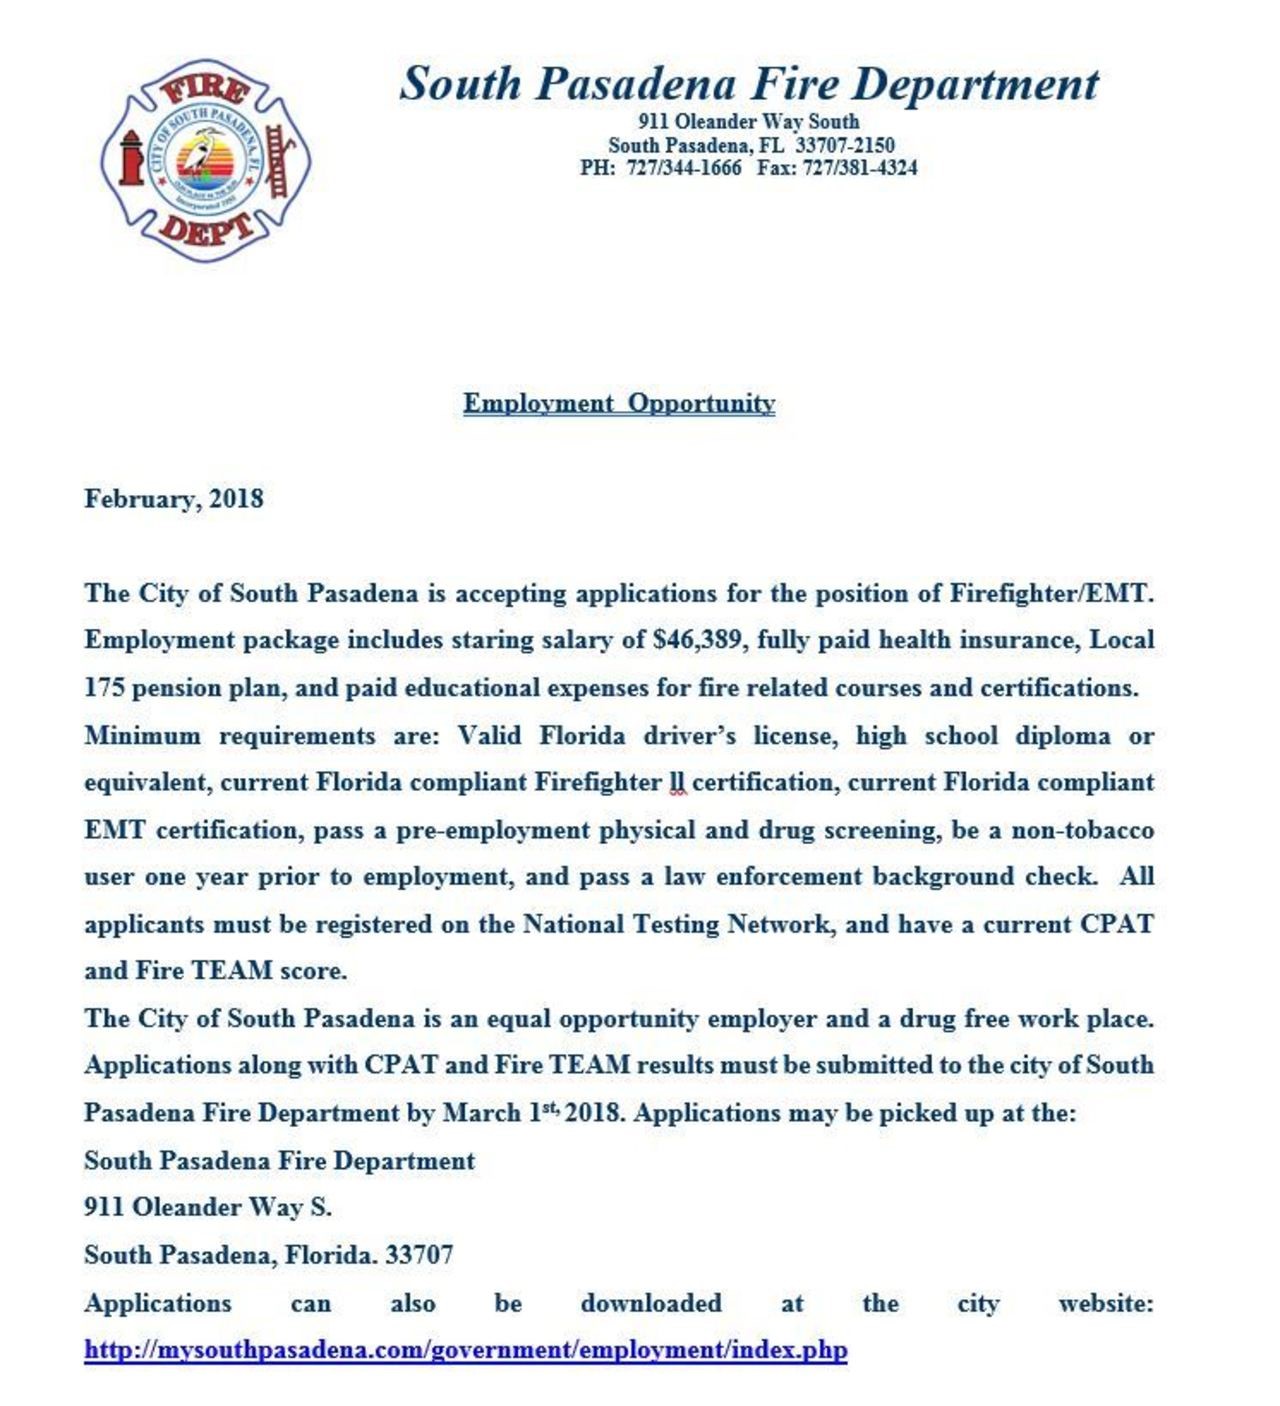 South Pasadena Fire Department Hiring FF/EMT